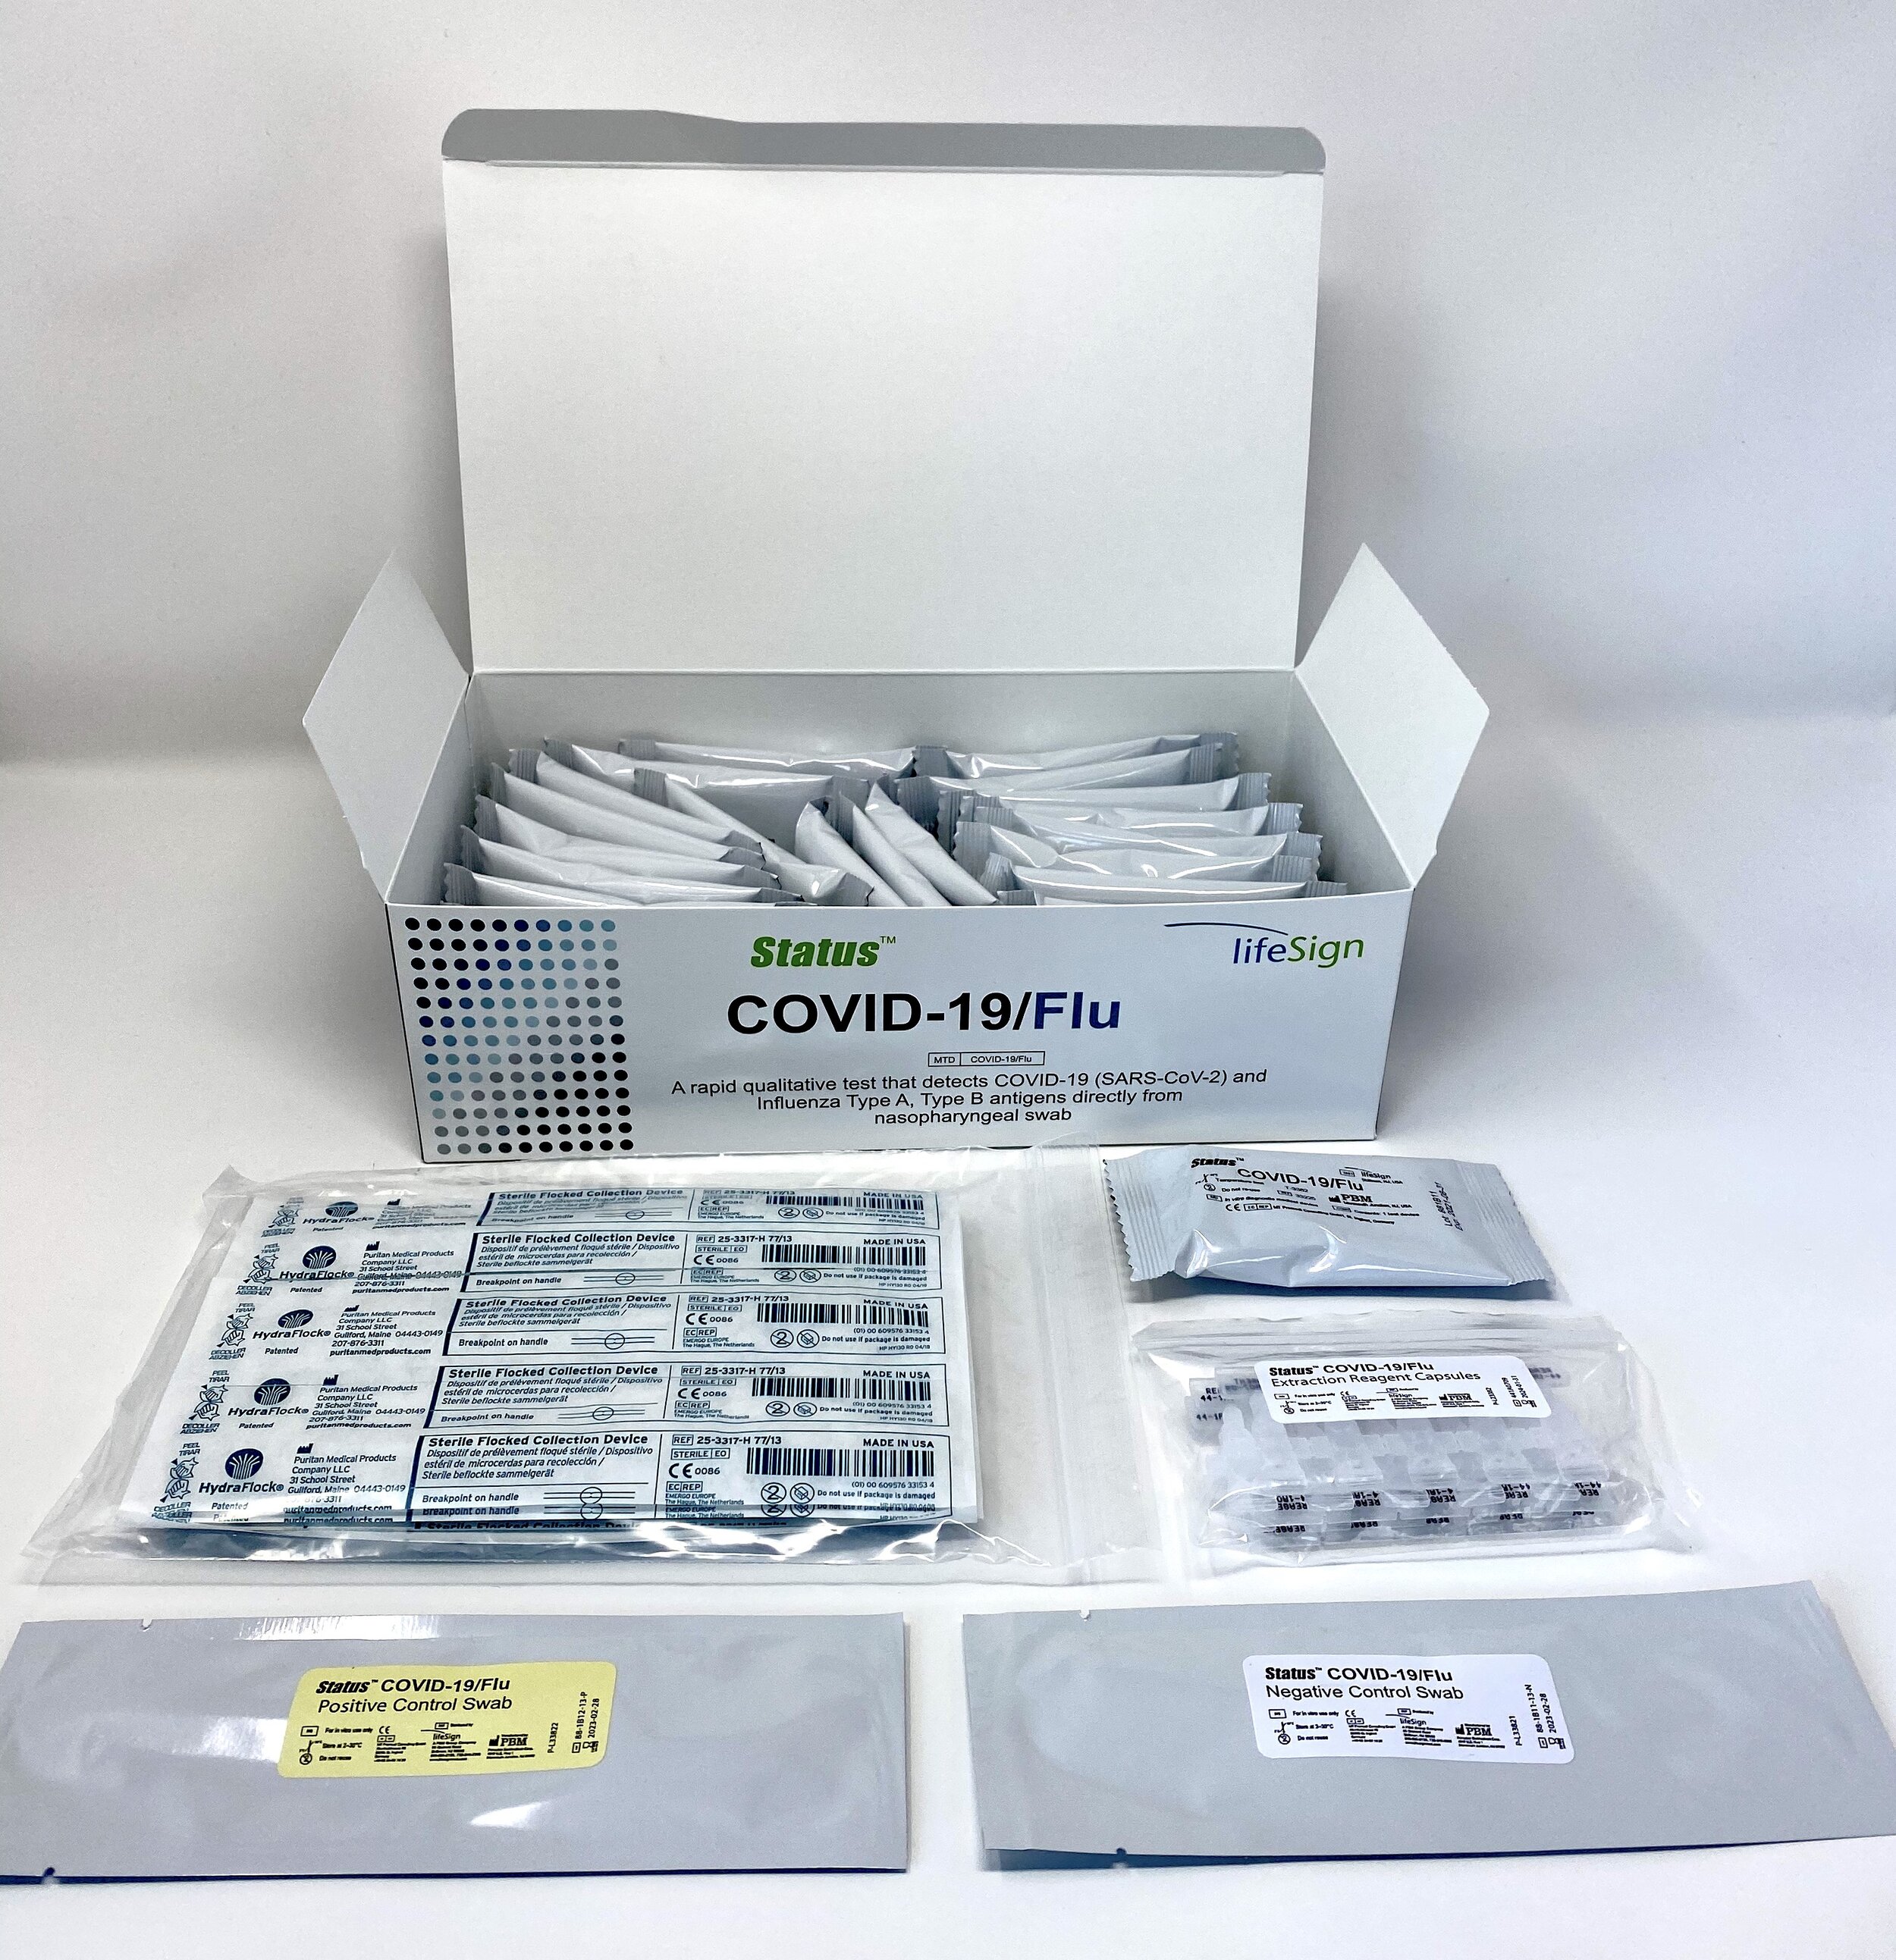 meSoigner - Anbio Covid19 & Flu A/b Combo Test B/1